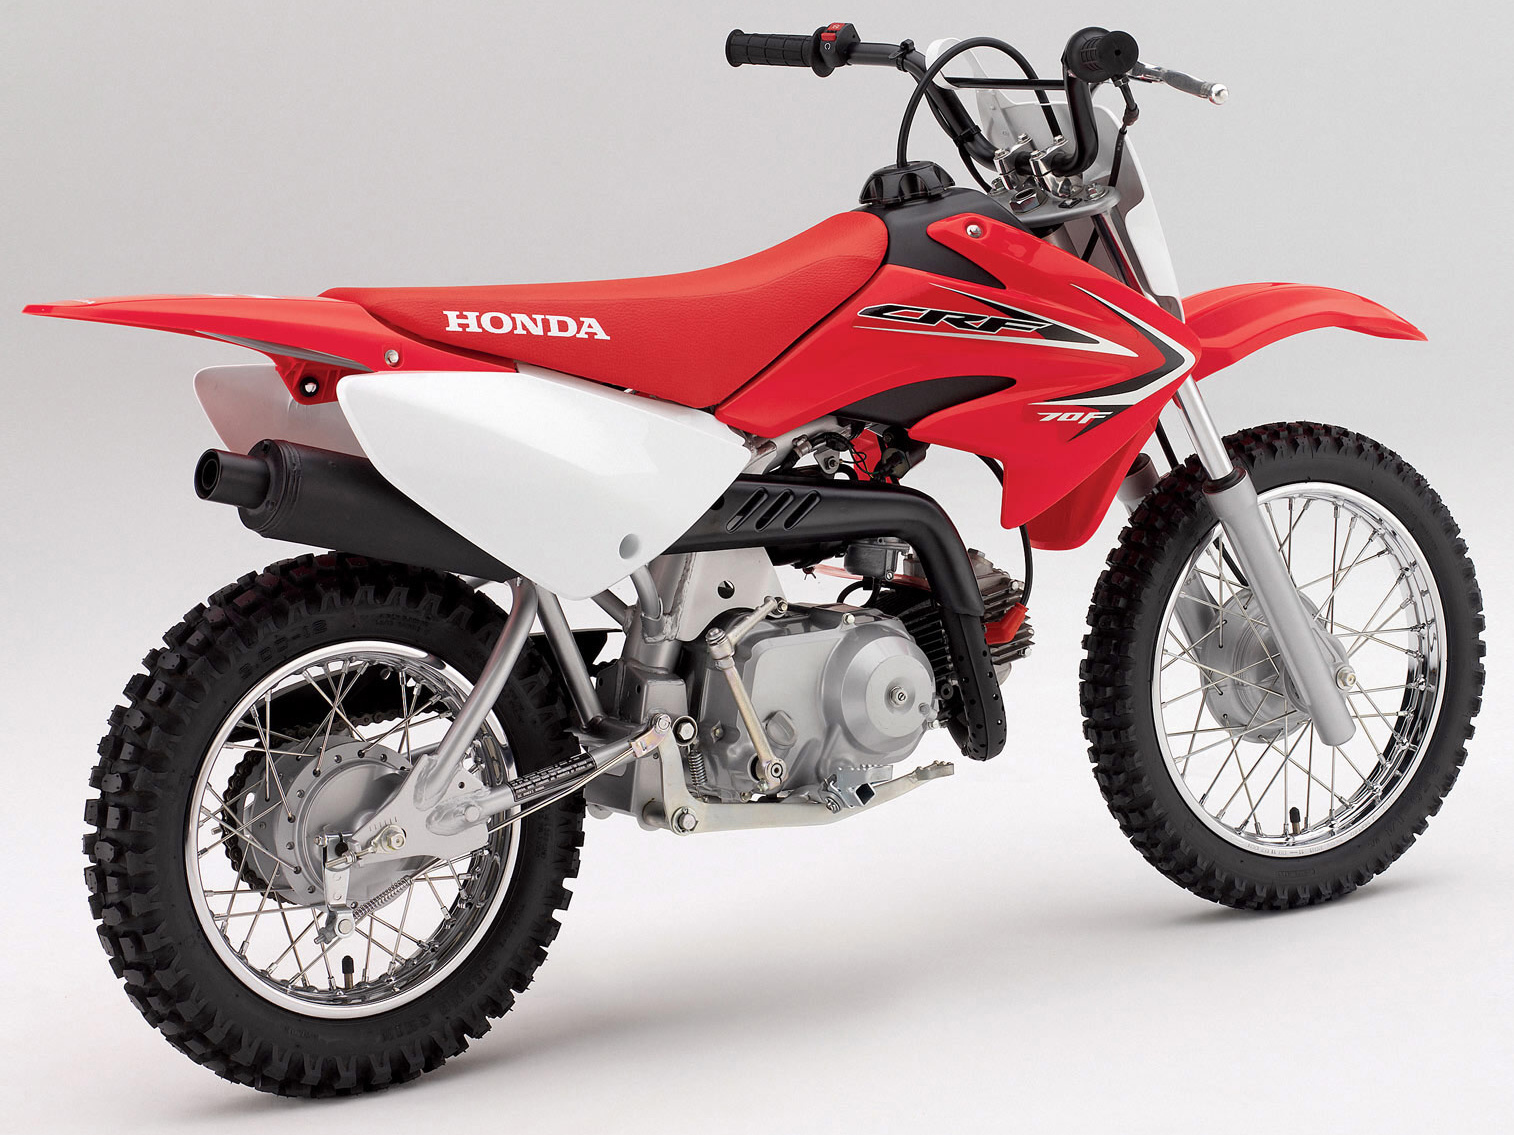 Мотоцикл Honda CRF 70 F 2011 Цена, Фото, Характеристики